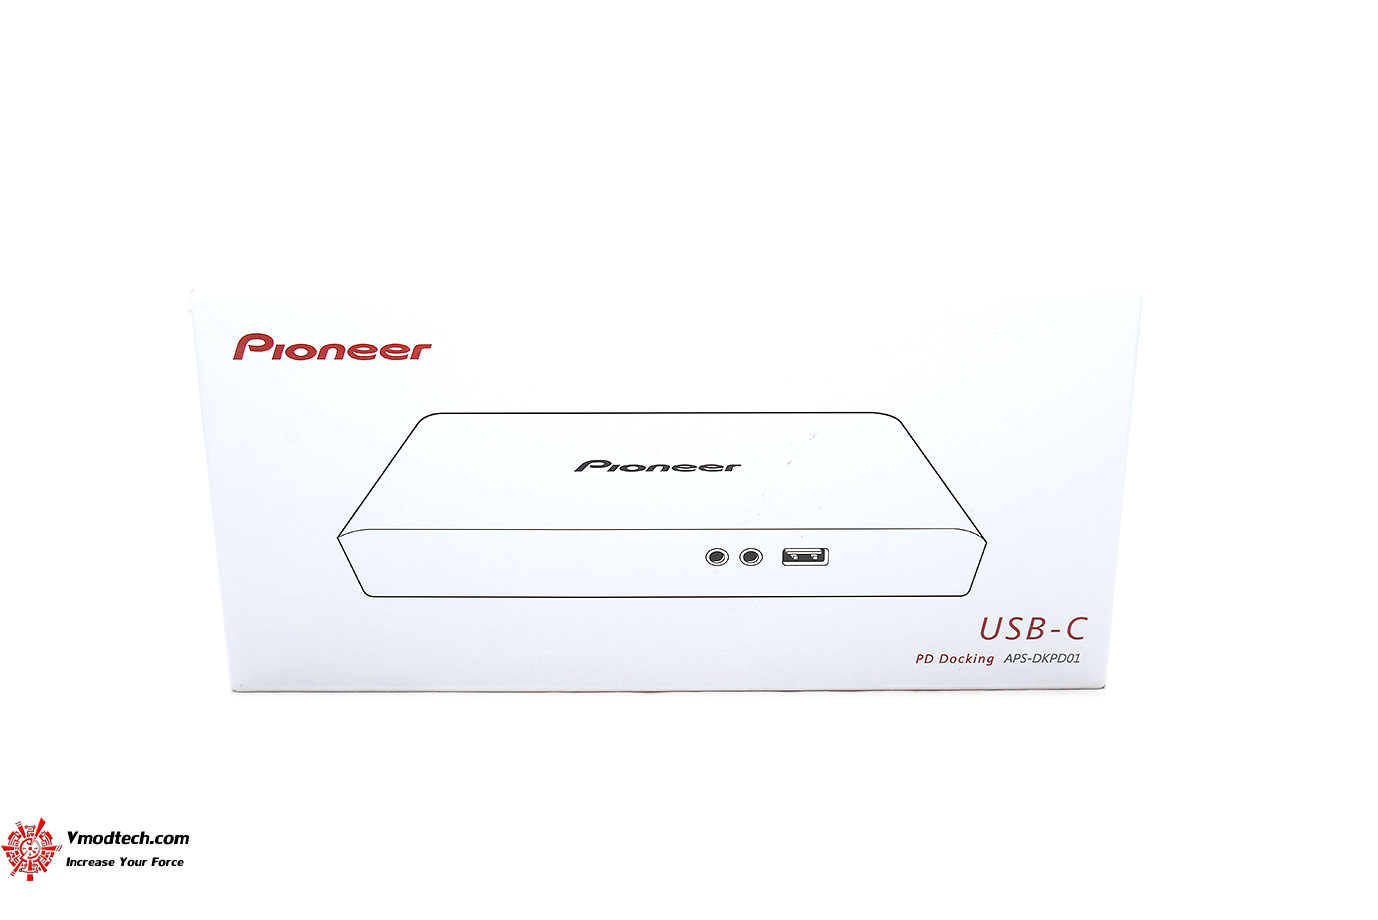 dsc 9039 Pioneer USB C PD Dock (APS DKPD01) Review